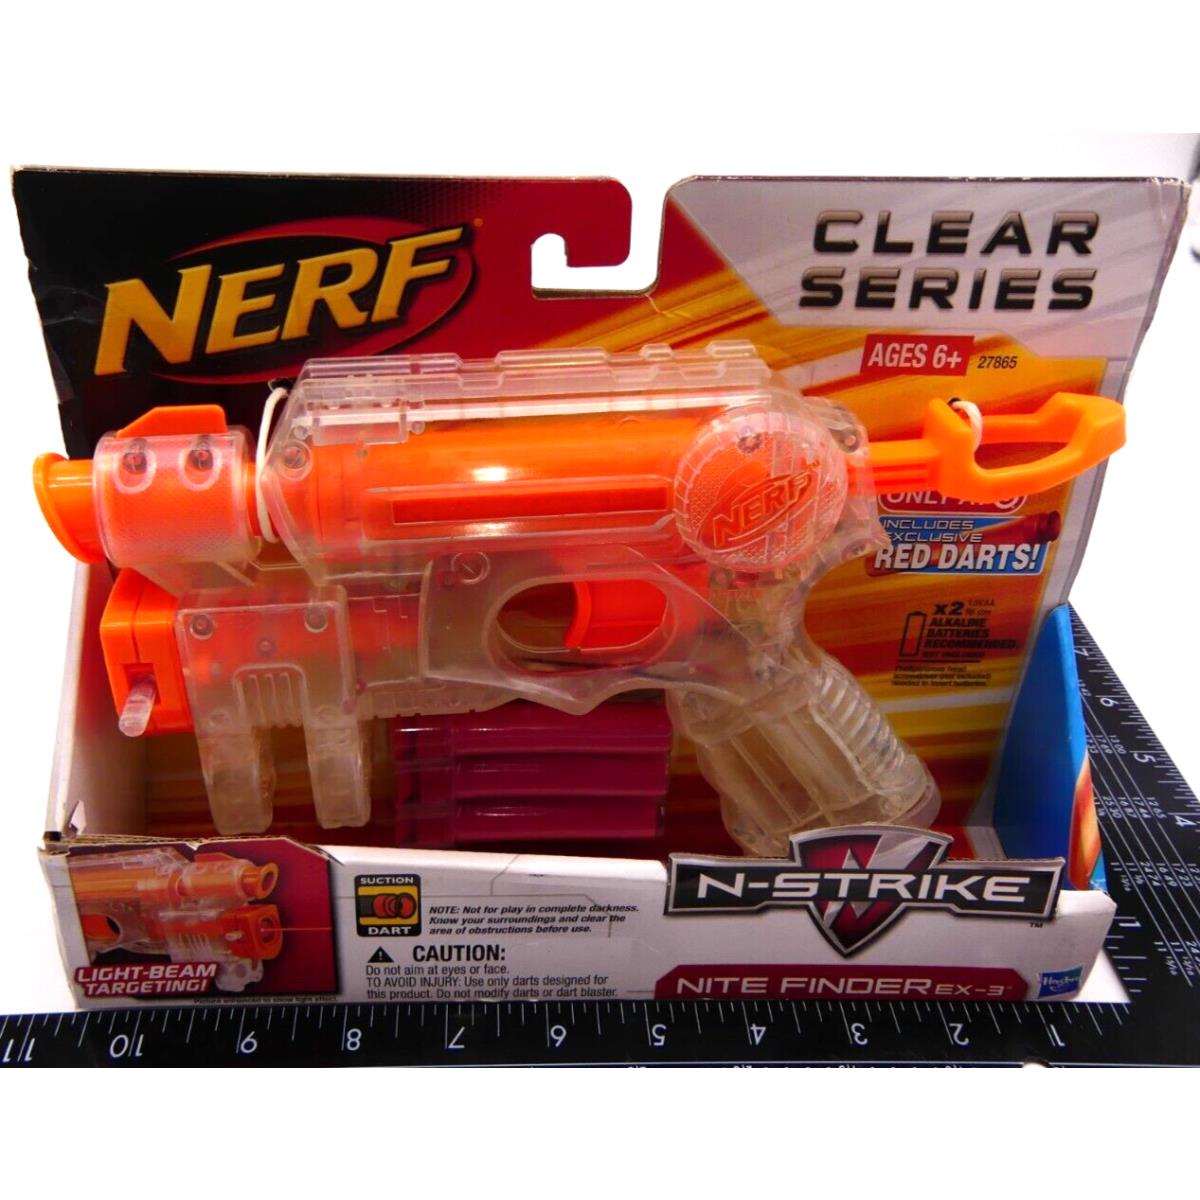 Nerf Nite Finder EX-3 Clear Series N-strike Gun Toy